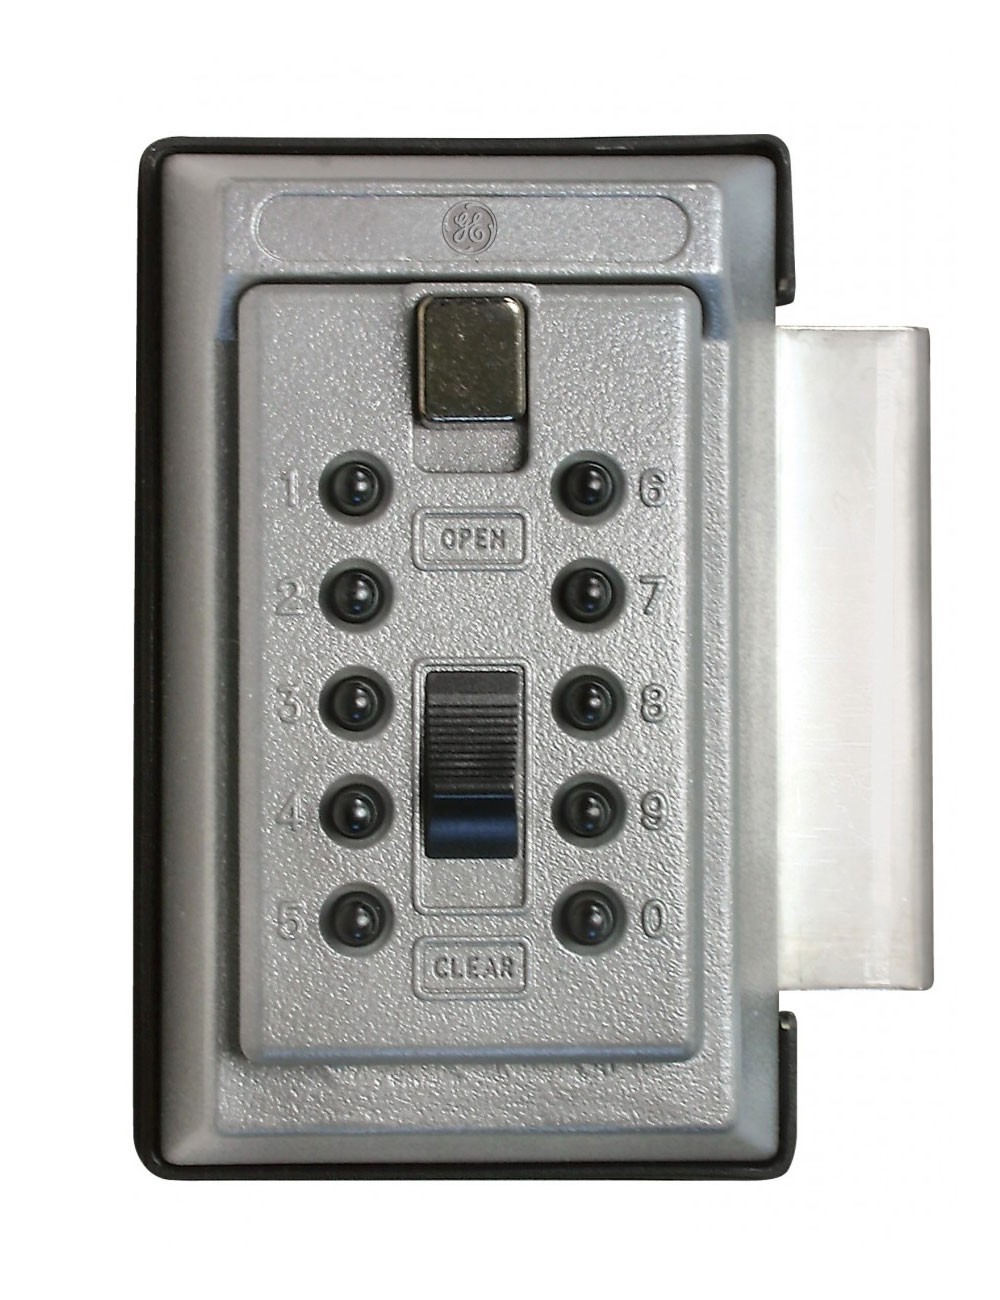 Mini-coffre à clés - Keysafe standard - Gesclés